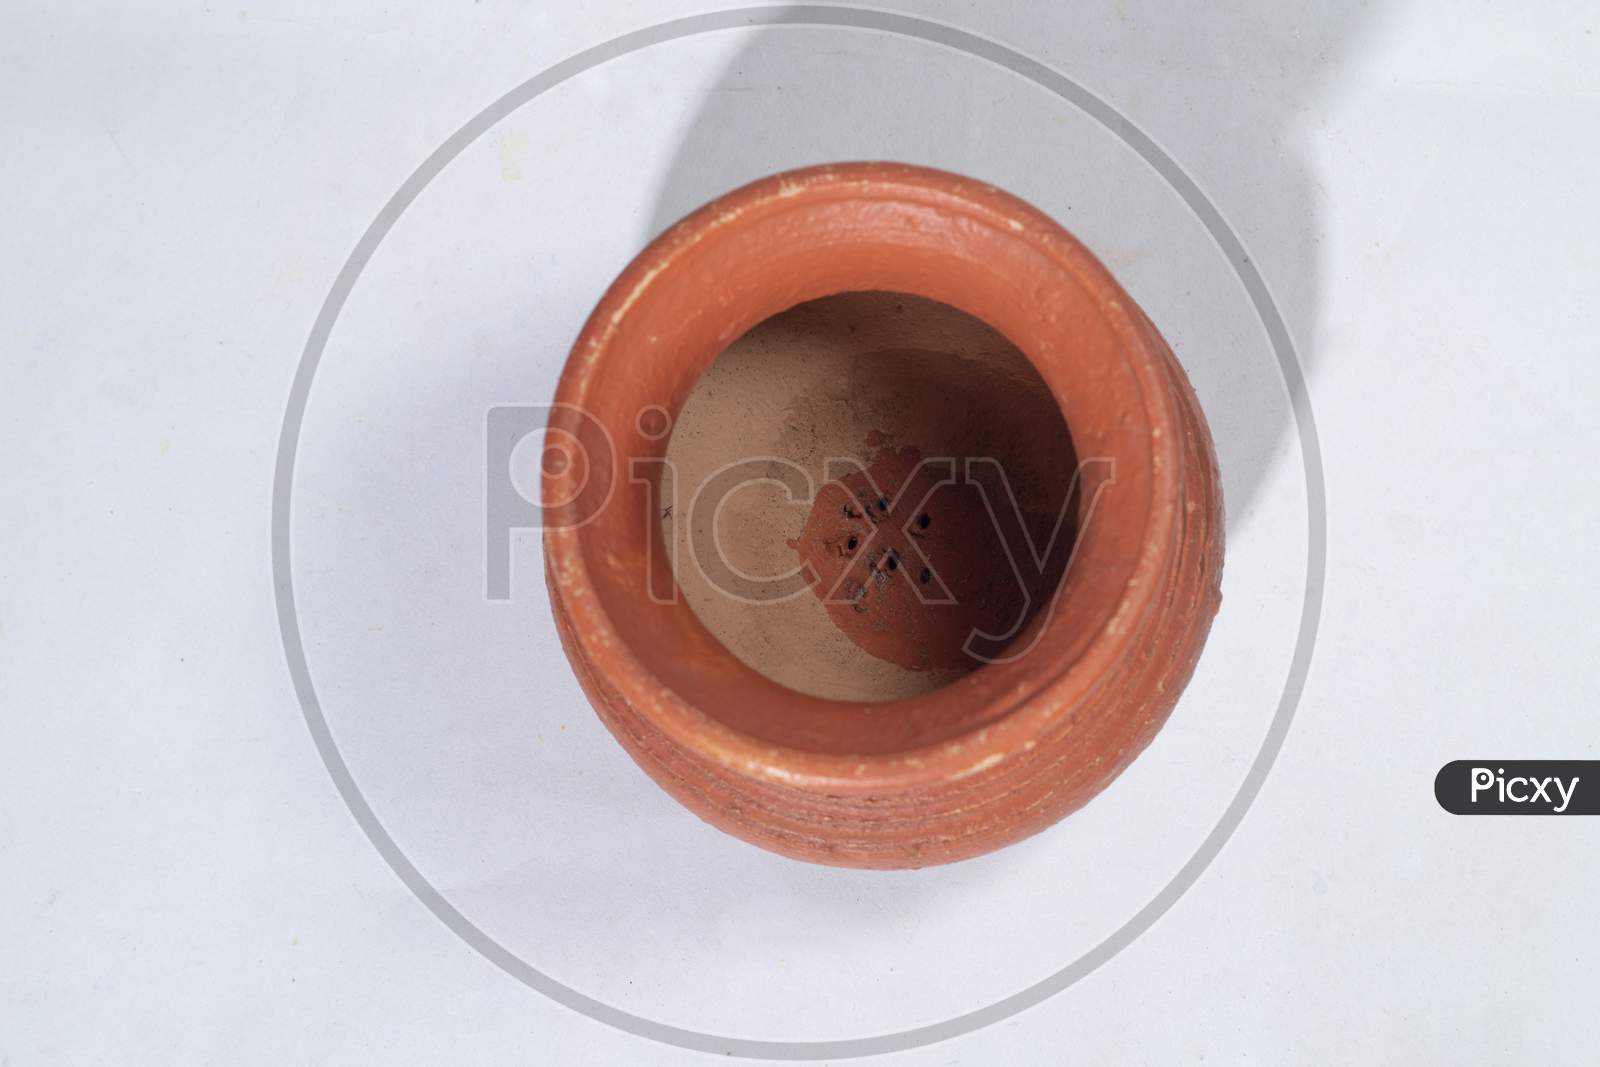 Indian Desi Small Clay Biryani Pot With White Background